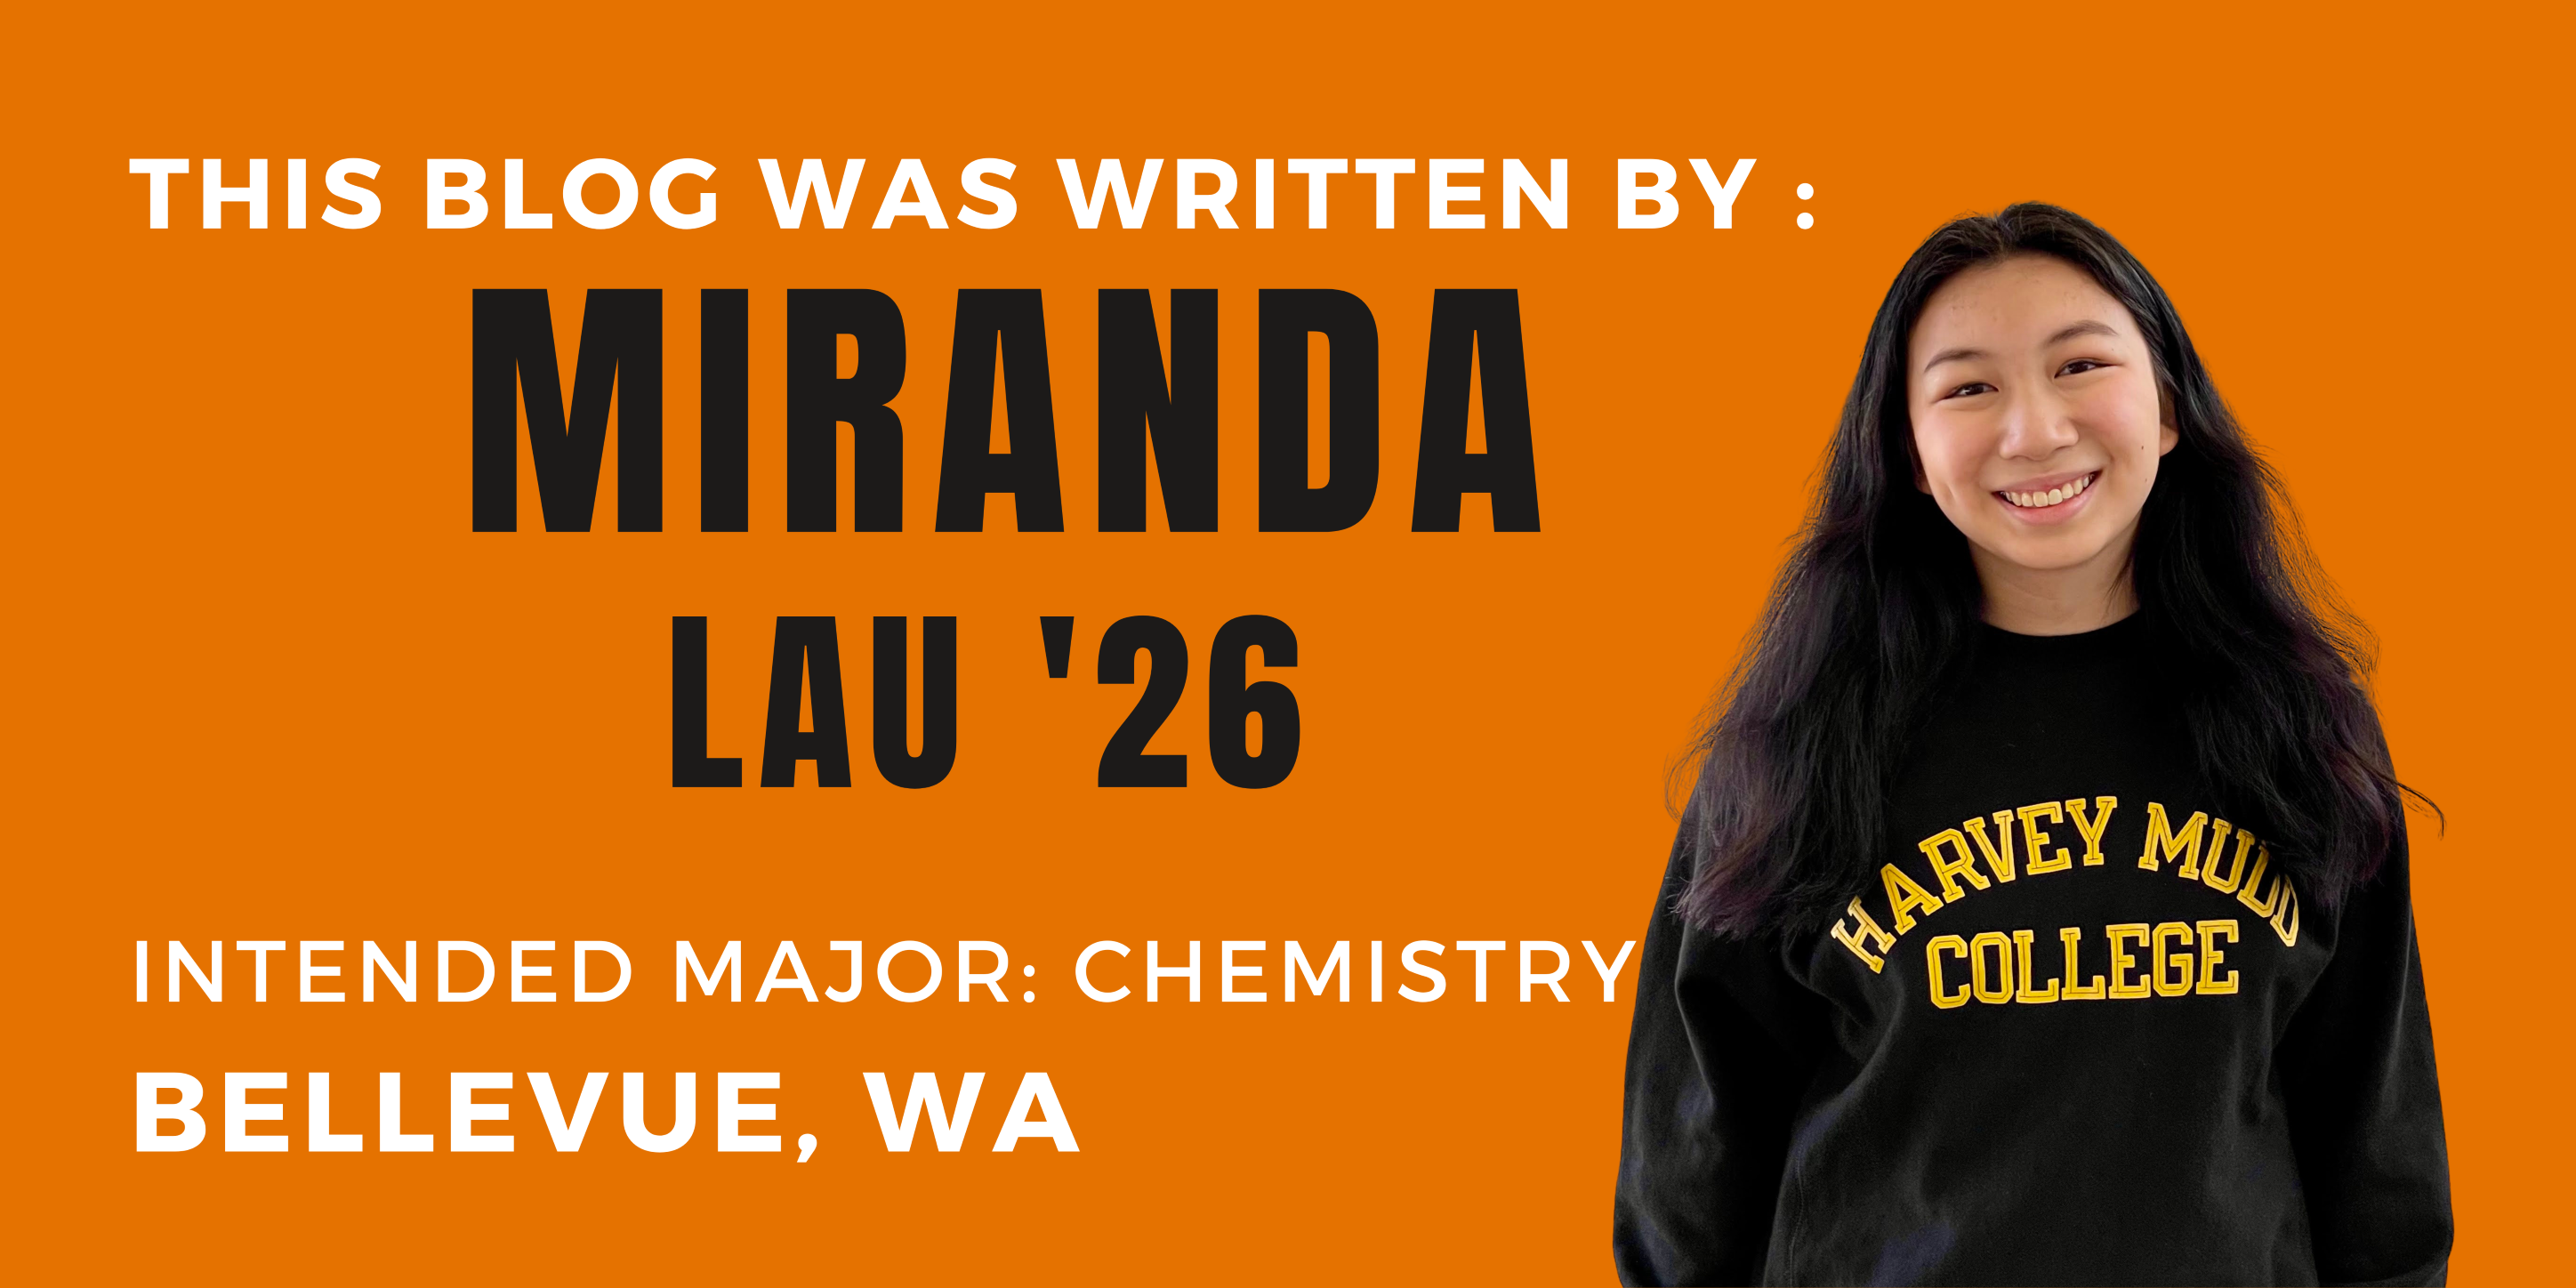 This blog was written by: Miranda Lau '26. Intended major: chemistry. Bellevue, WA